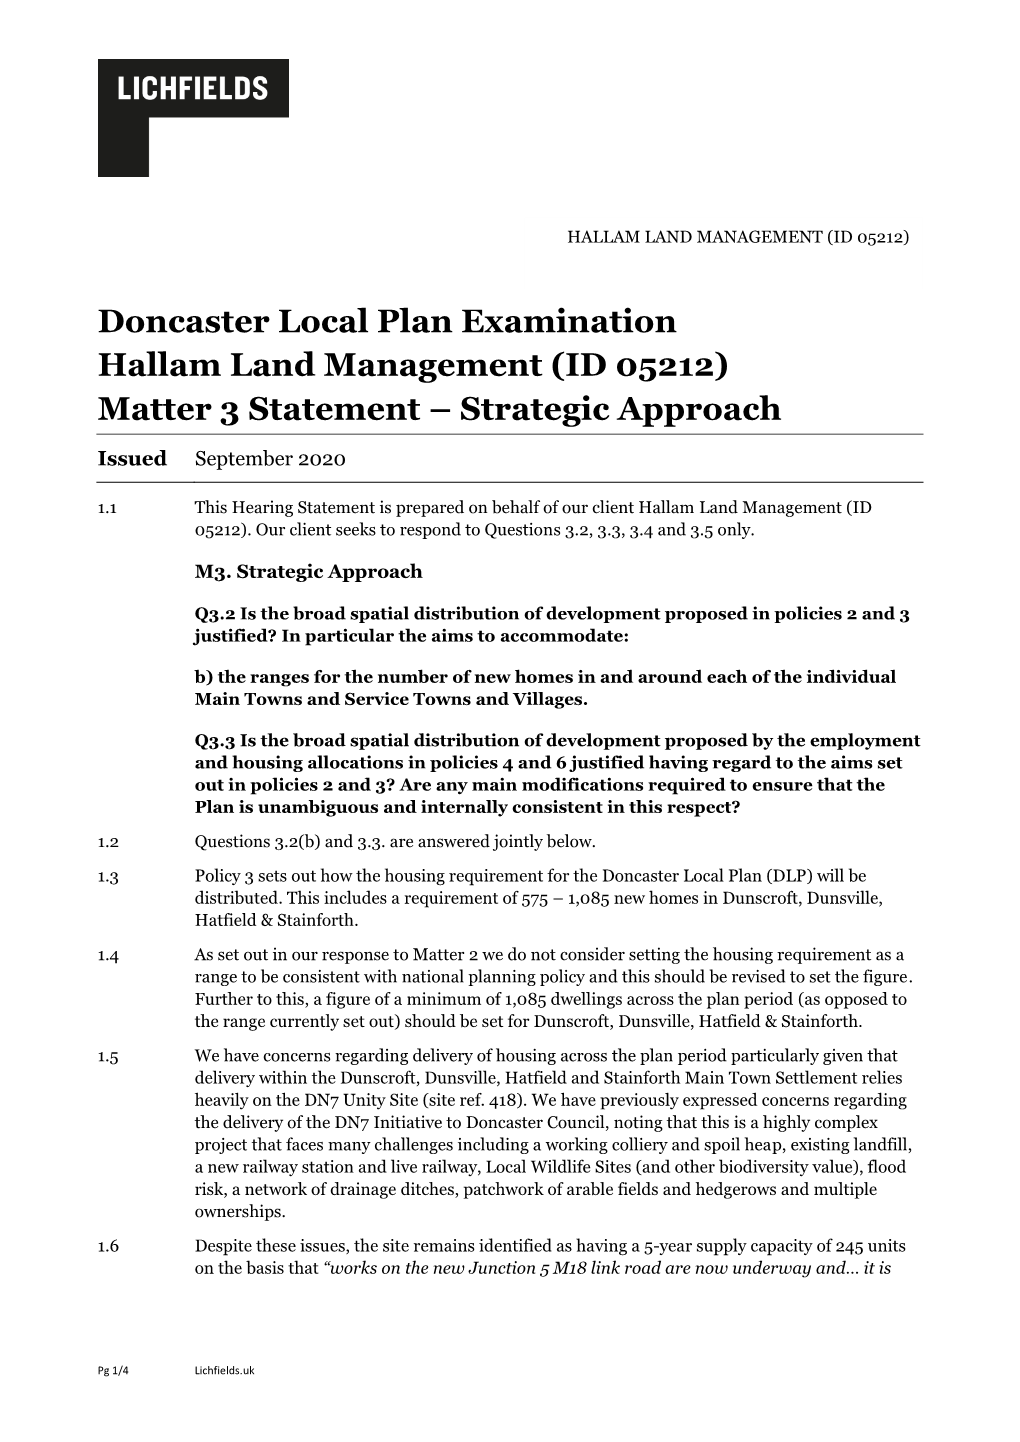 Doncaster Local Plan Examination Hallam Land Management (ID 05212) Matter 3 Statement – Strategic Approach